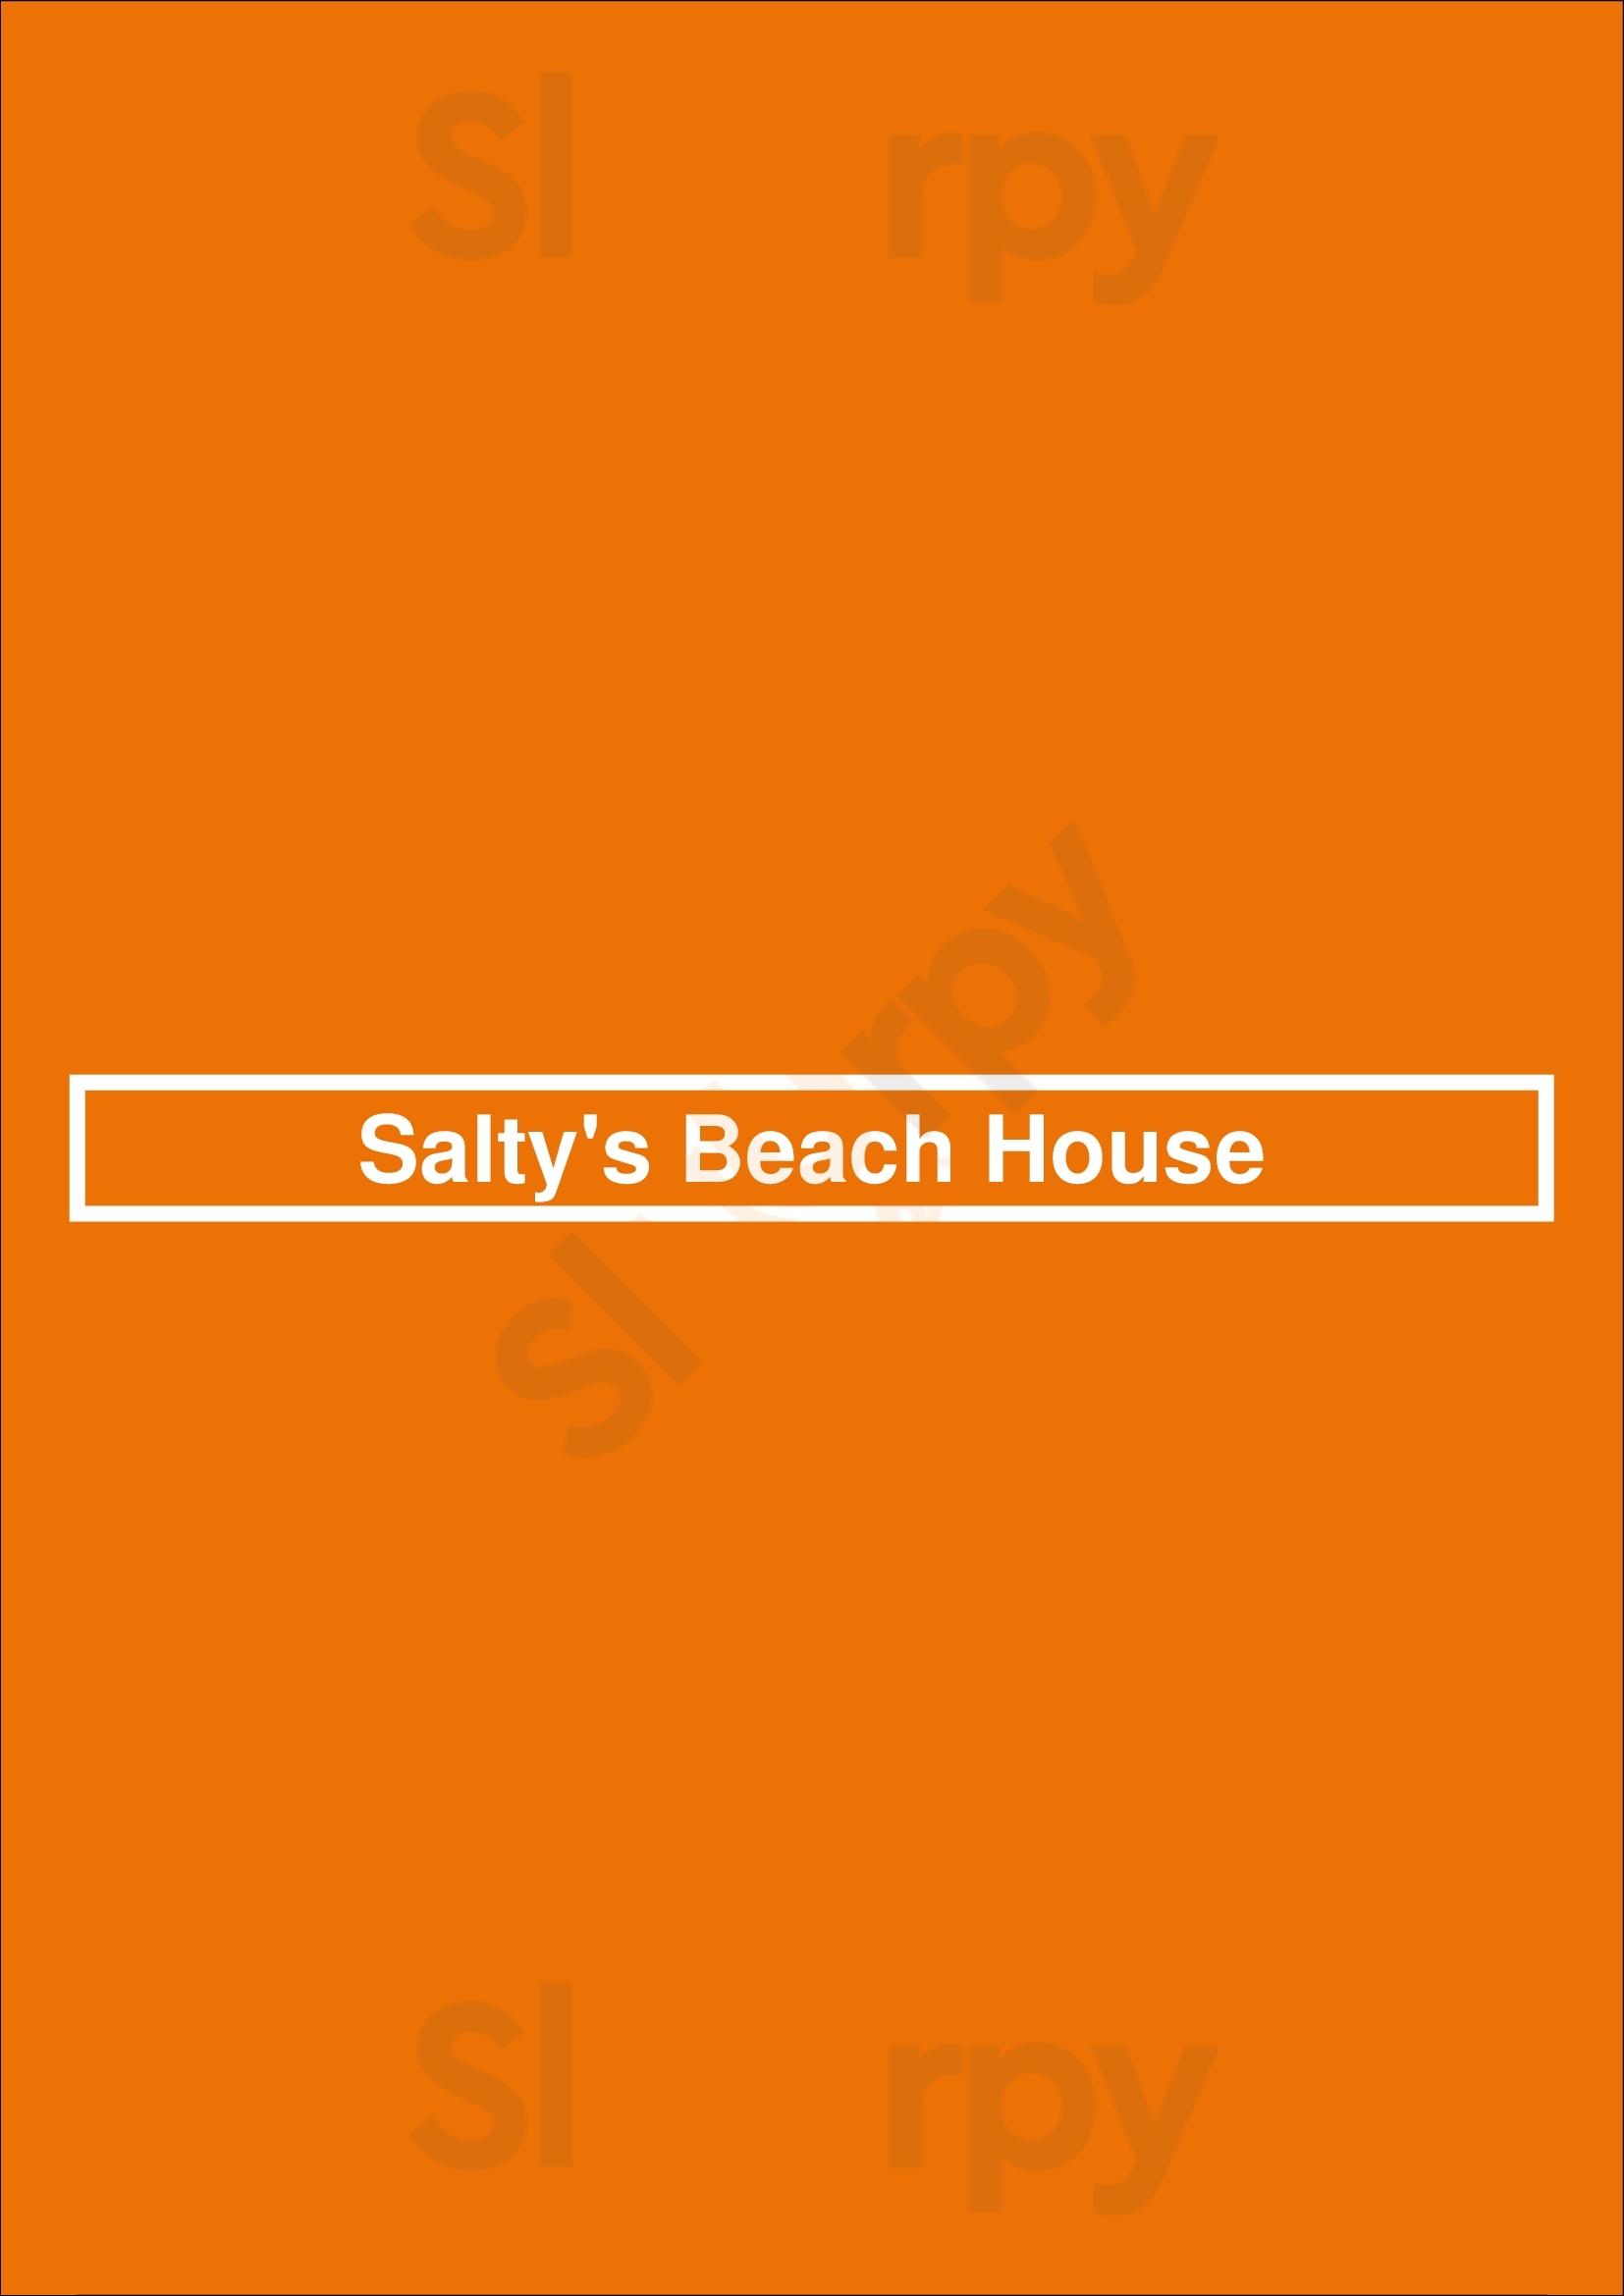 Salty's Beach House Penticton Menu - 1